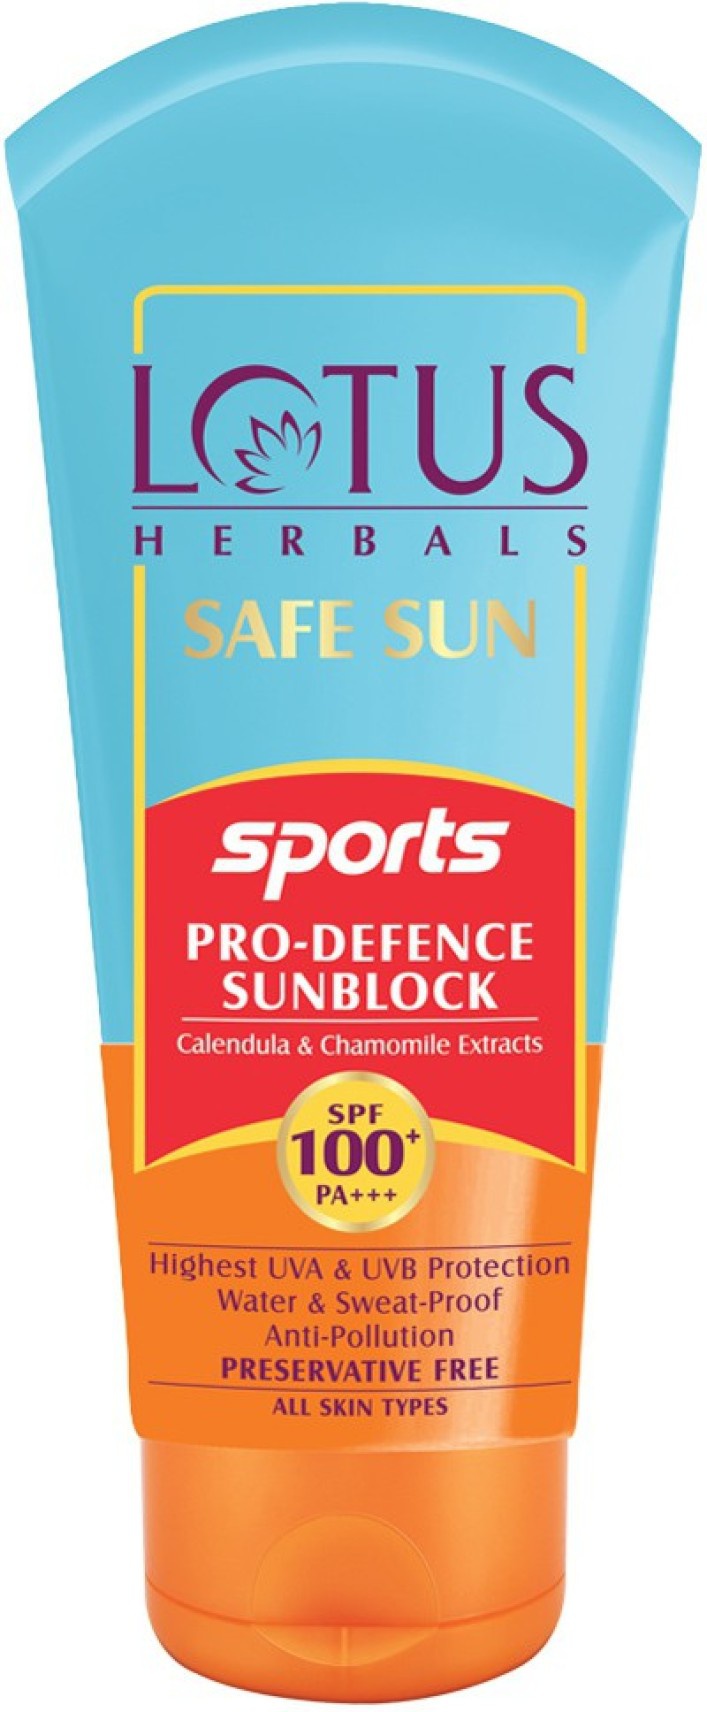 Lotus Herbals Safe Sun Sports Pro Defence Sunblock Spf 100 PA+++